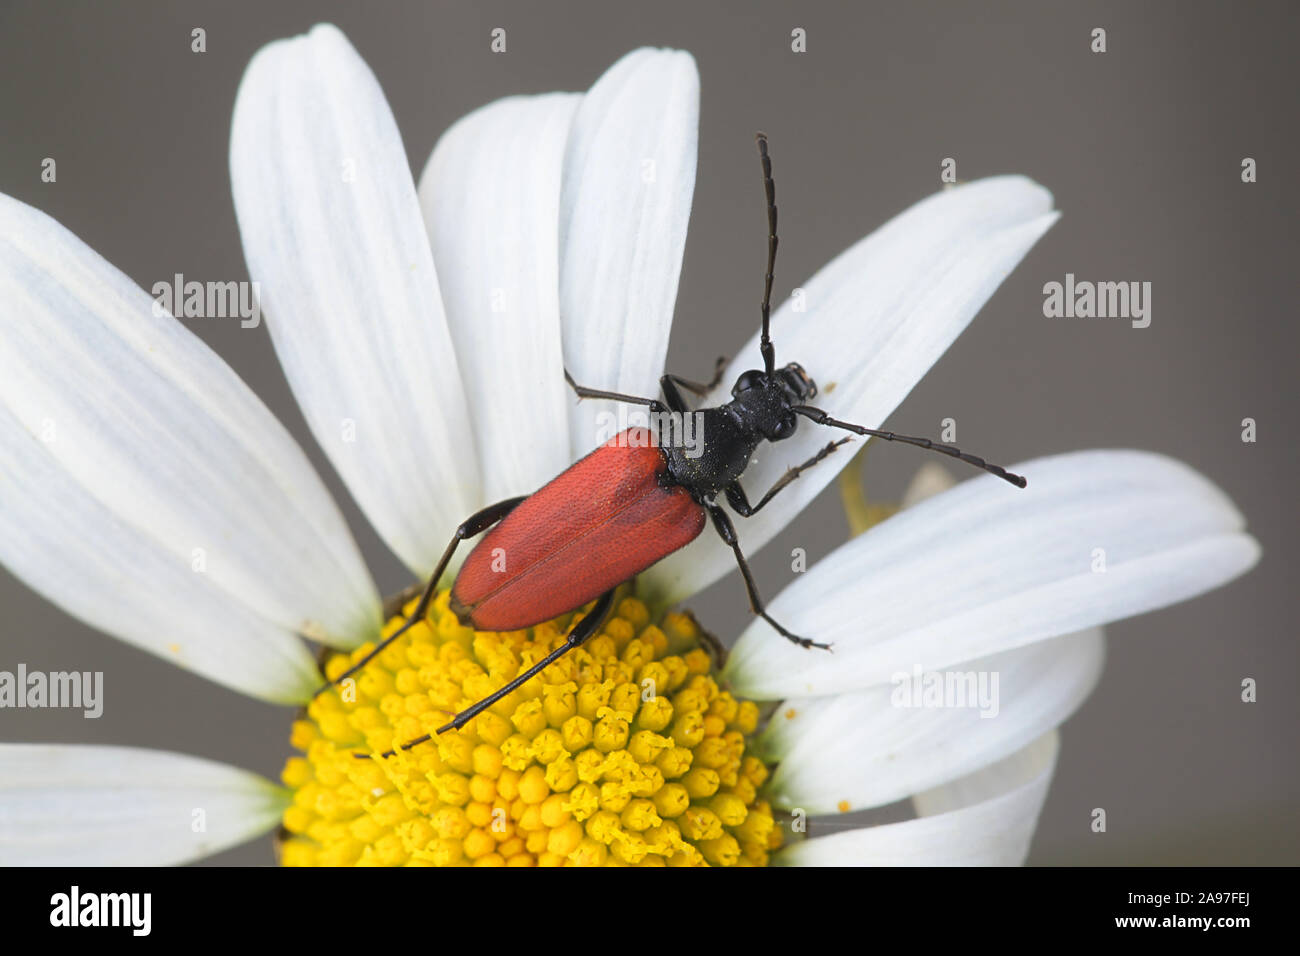 Anastrangalia sanguinolenta, a species of flower longhorn beetles belonging to the family Cerambycidae Stock Photo